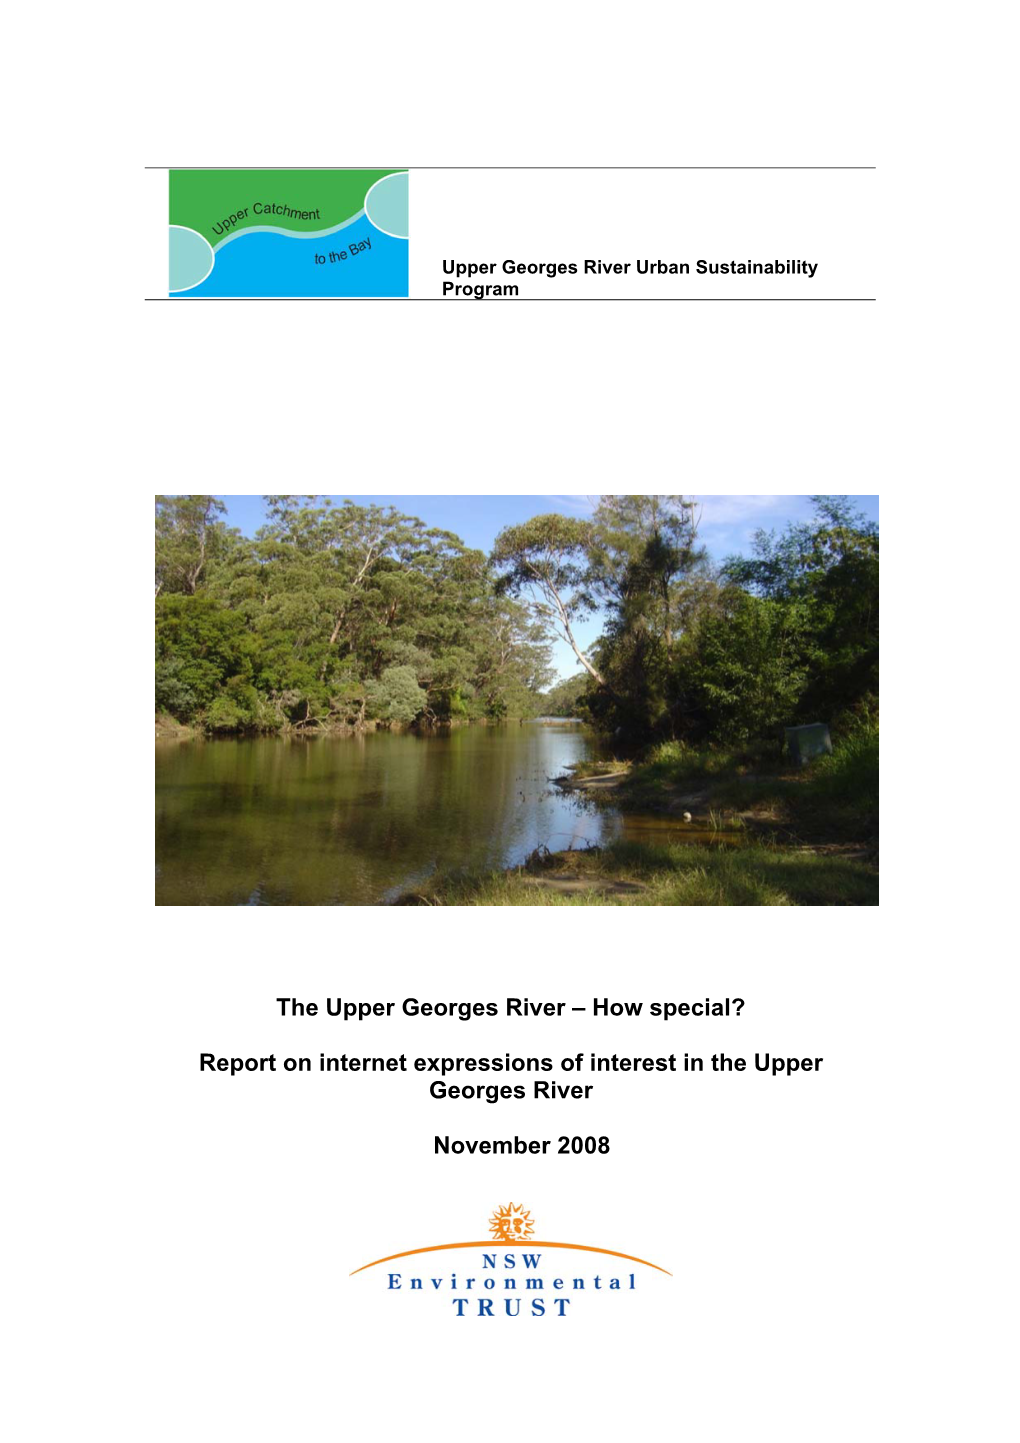 Upper Georges River Urban Sustainability Program 2008